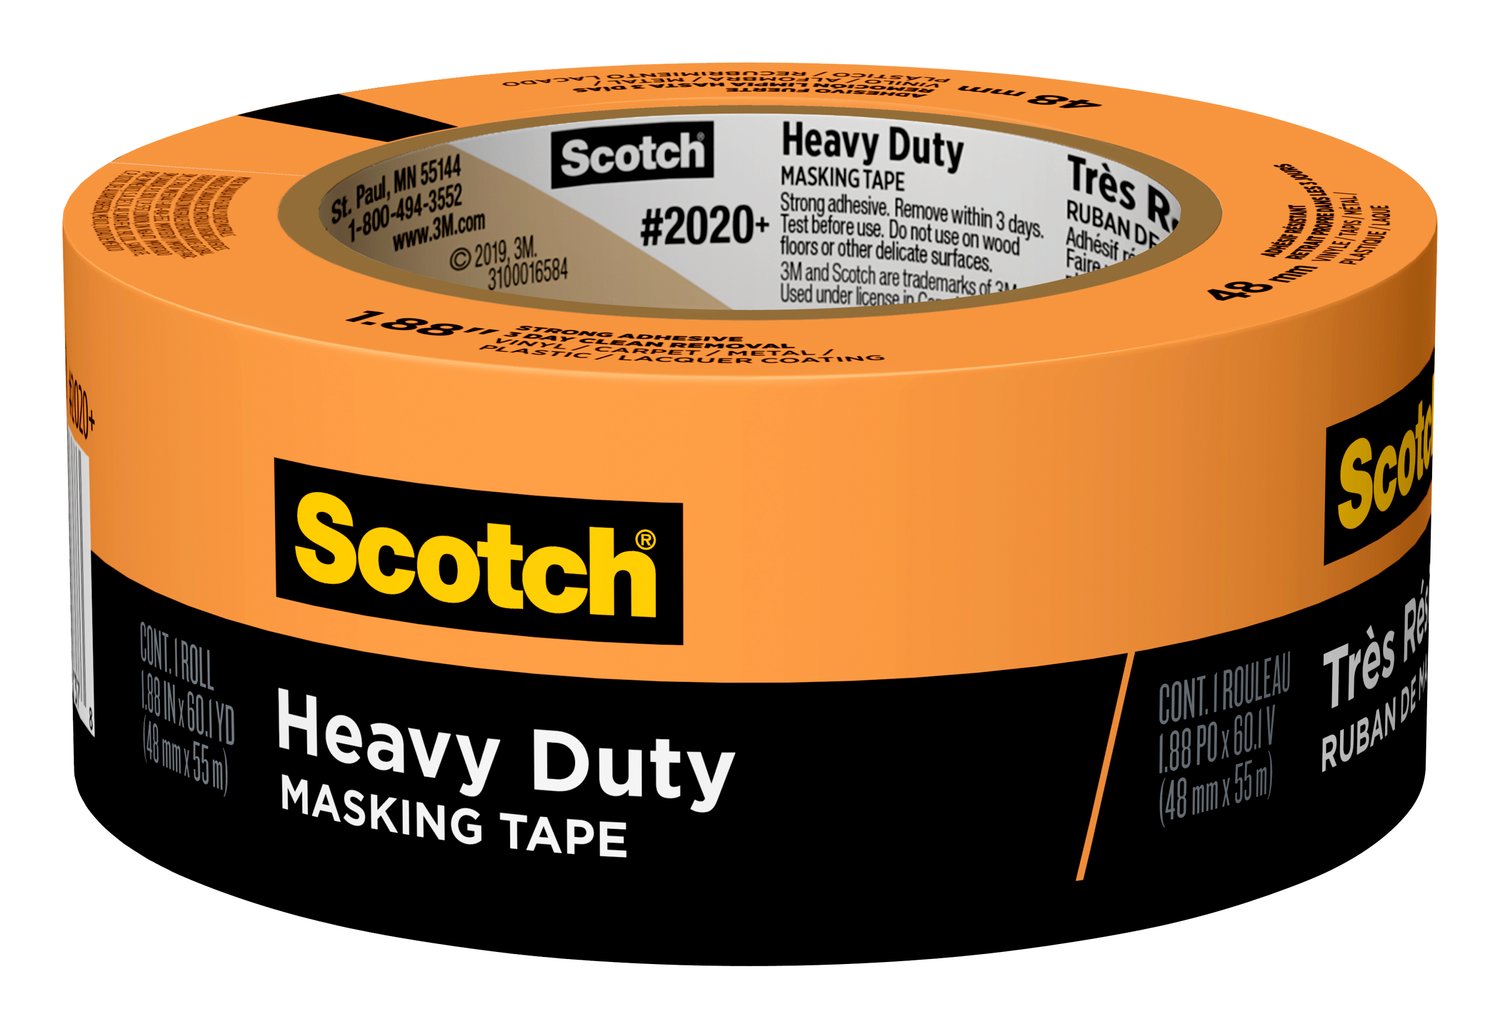 7100191057 - Scotch Heavy Duty Masking Tape 2020+-48TP, 1.88 in x 60.1 yd (48mm x
55m)